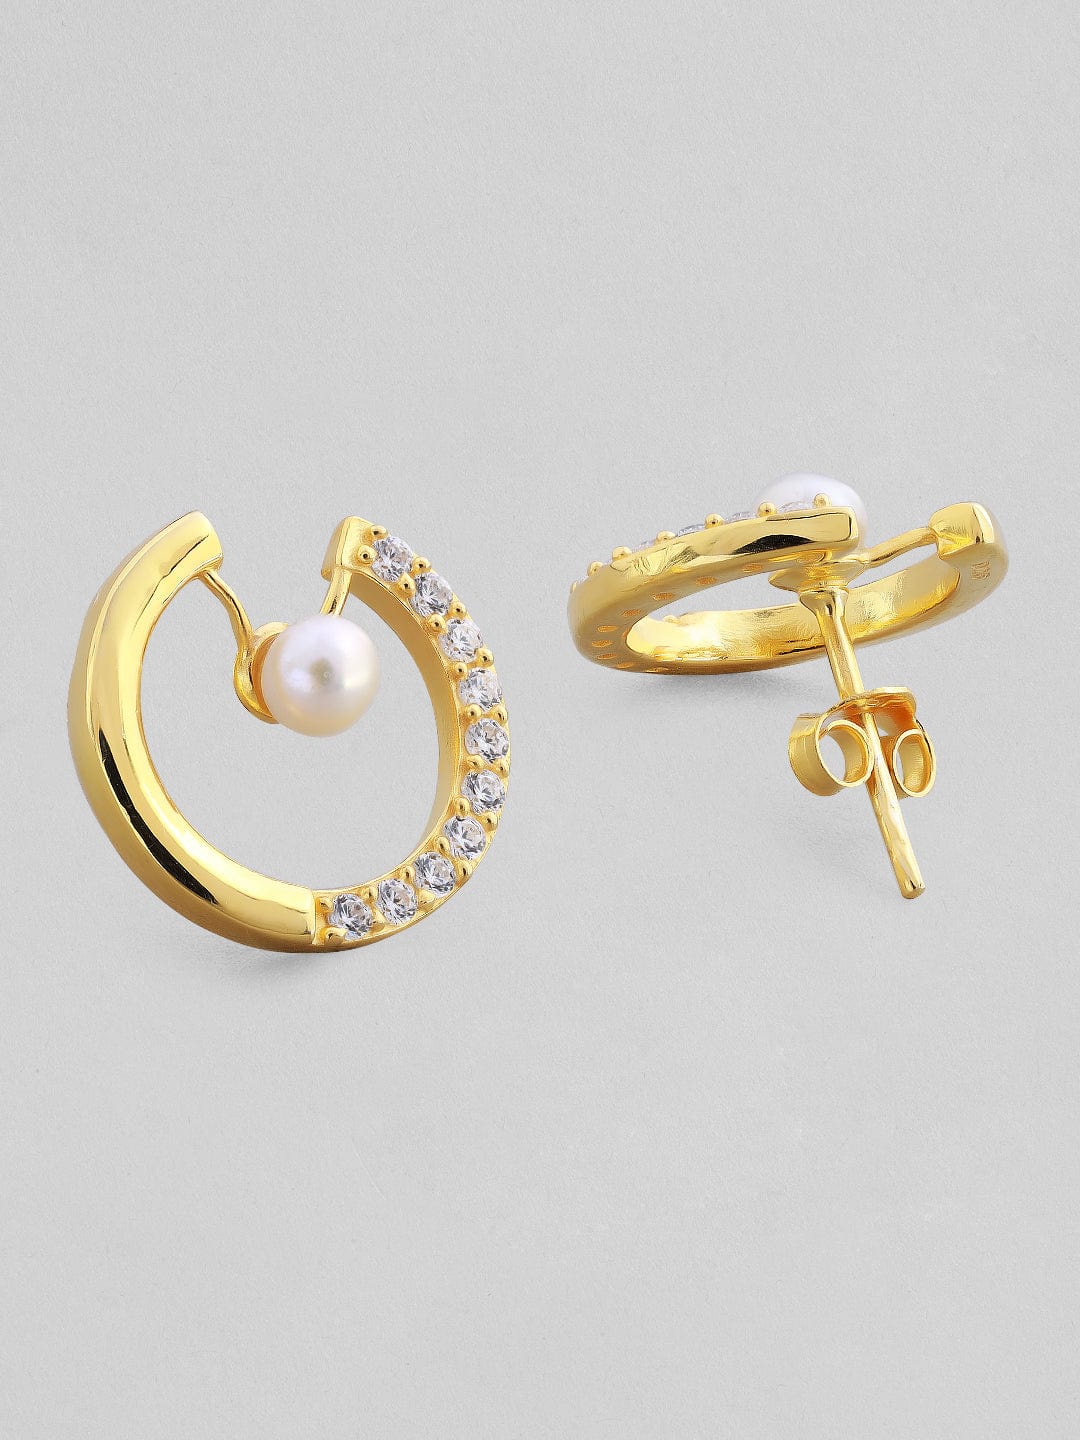 Rubans 925 Silver Asymmetrical Merge Of Pearls And Zirconia Stud Earrings.- Gold Plated Earrings